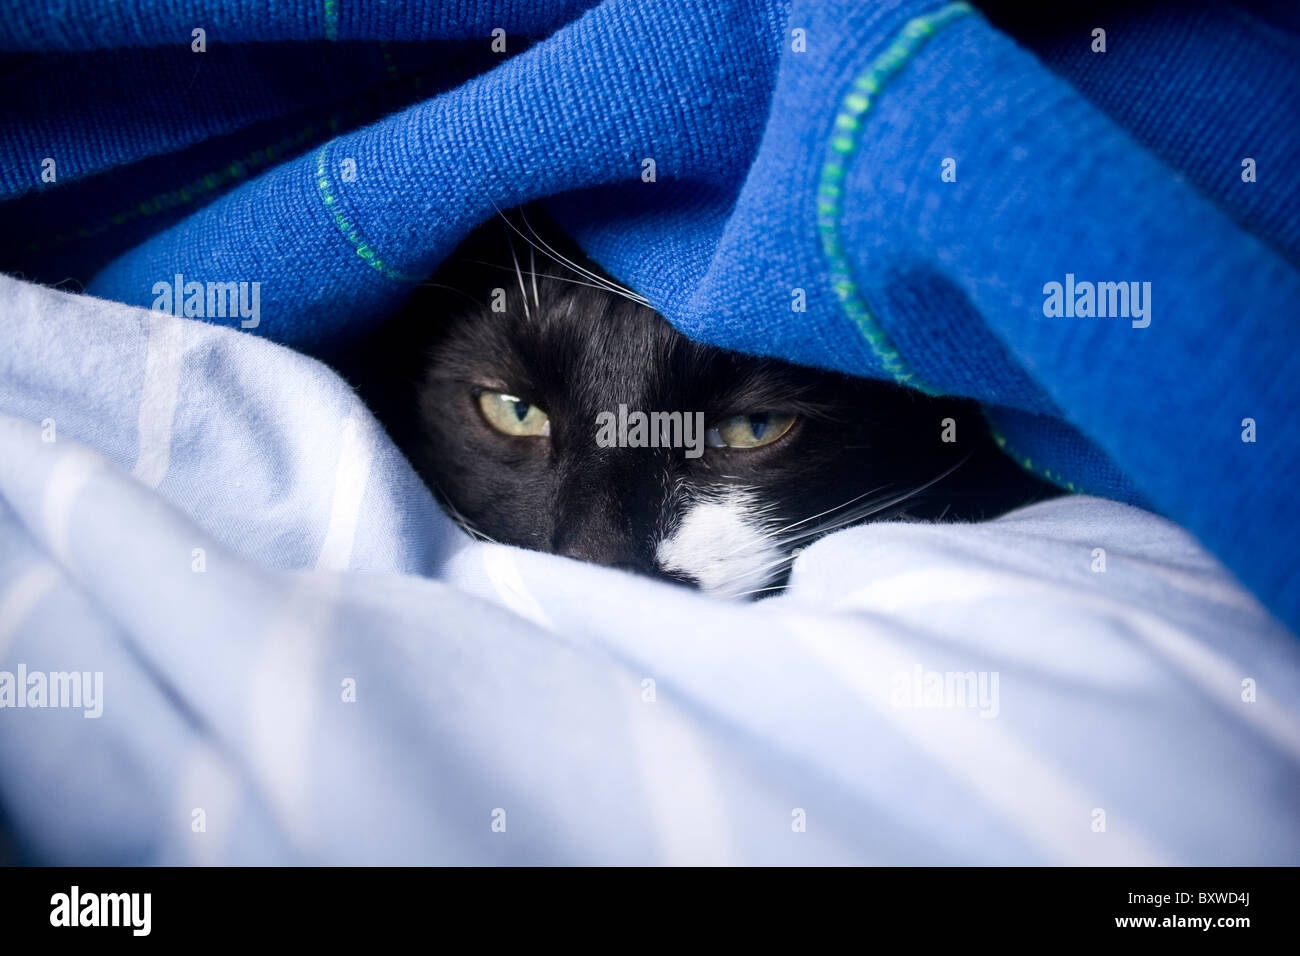 Cat peeking from under blanket Stock Photo - Alamy